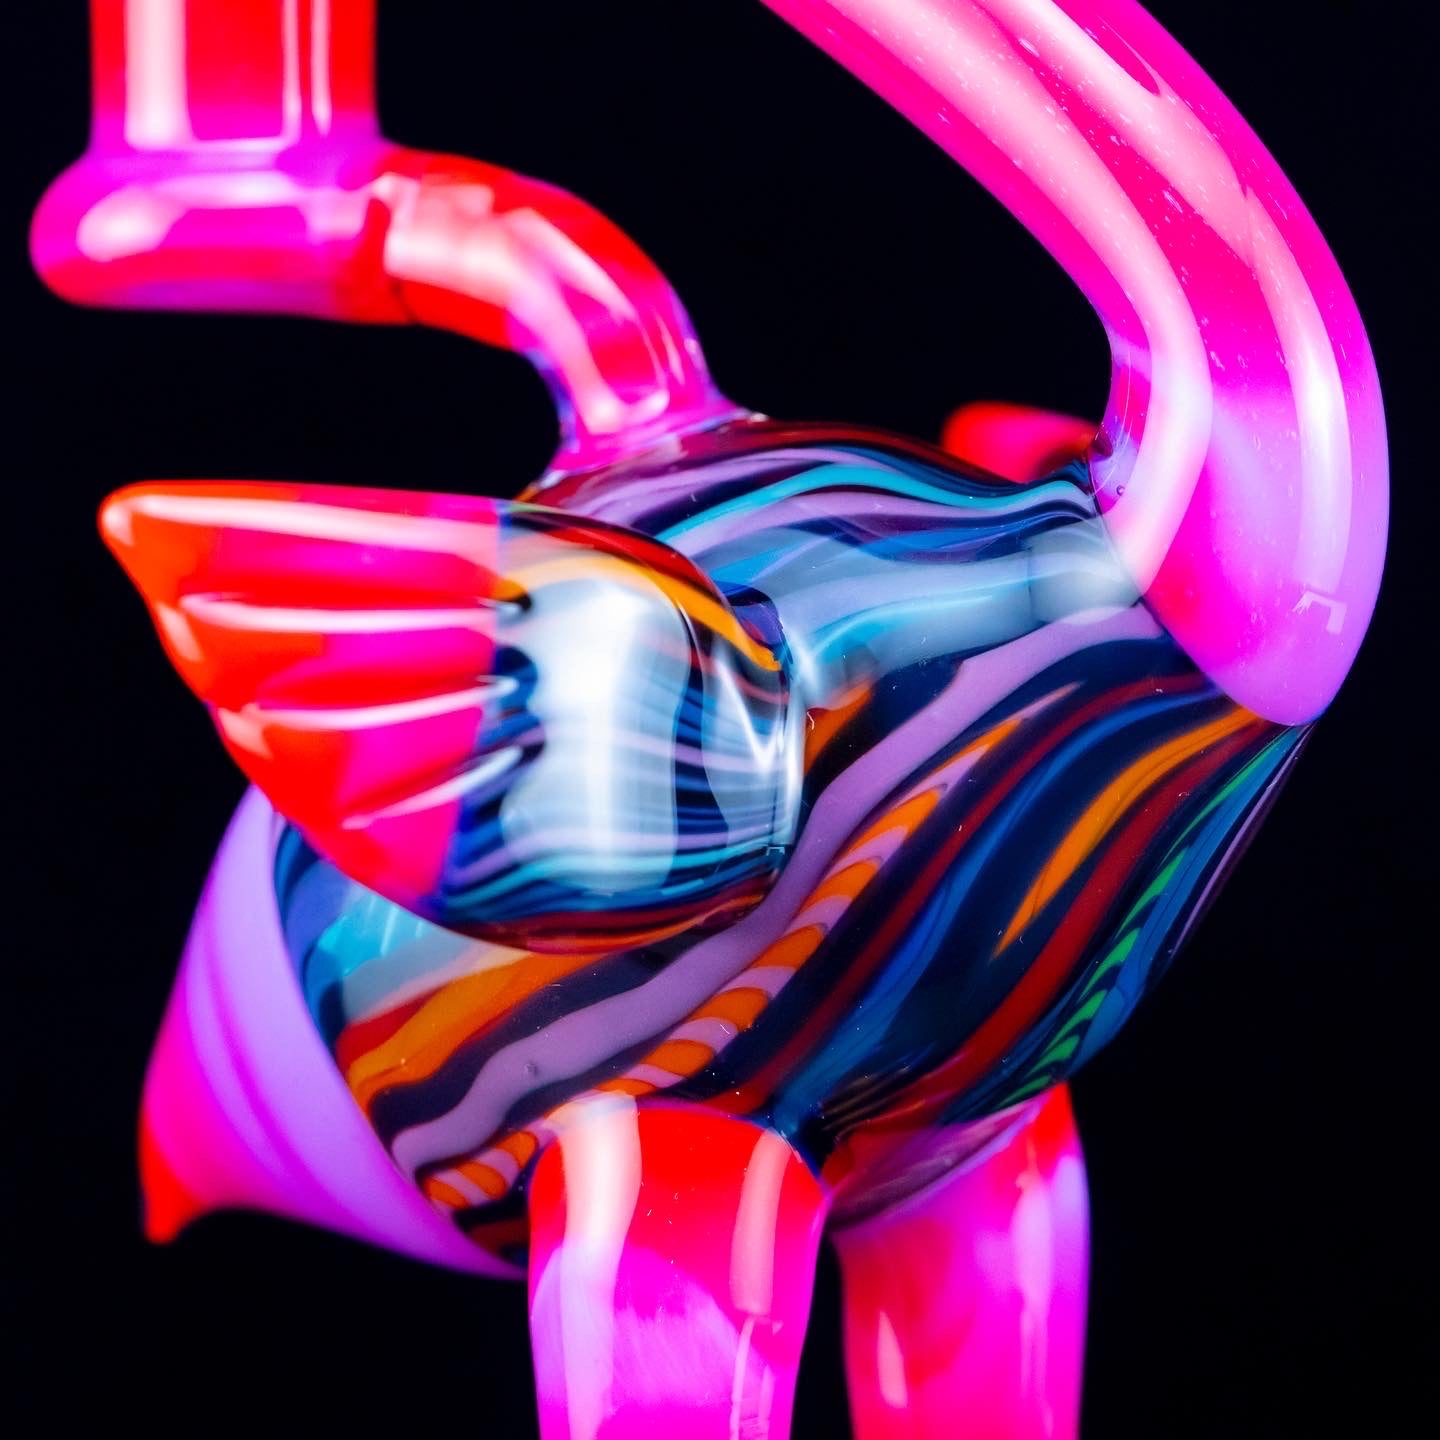 Flamingo Rig by Burtoni x Trip A (Coogi Zoo)